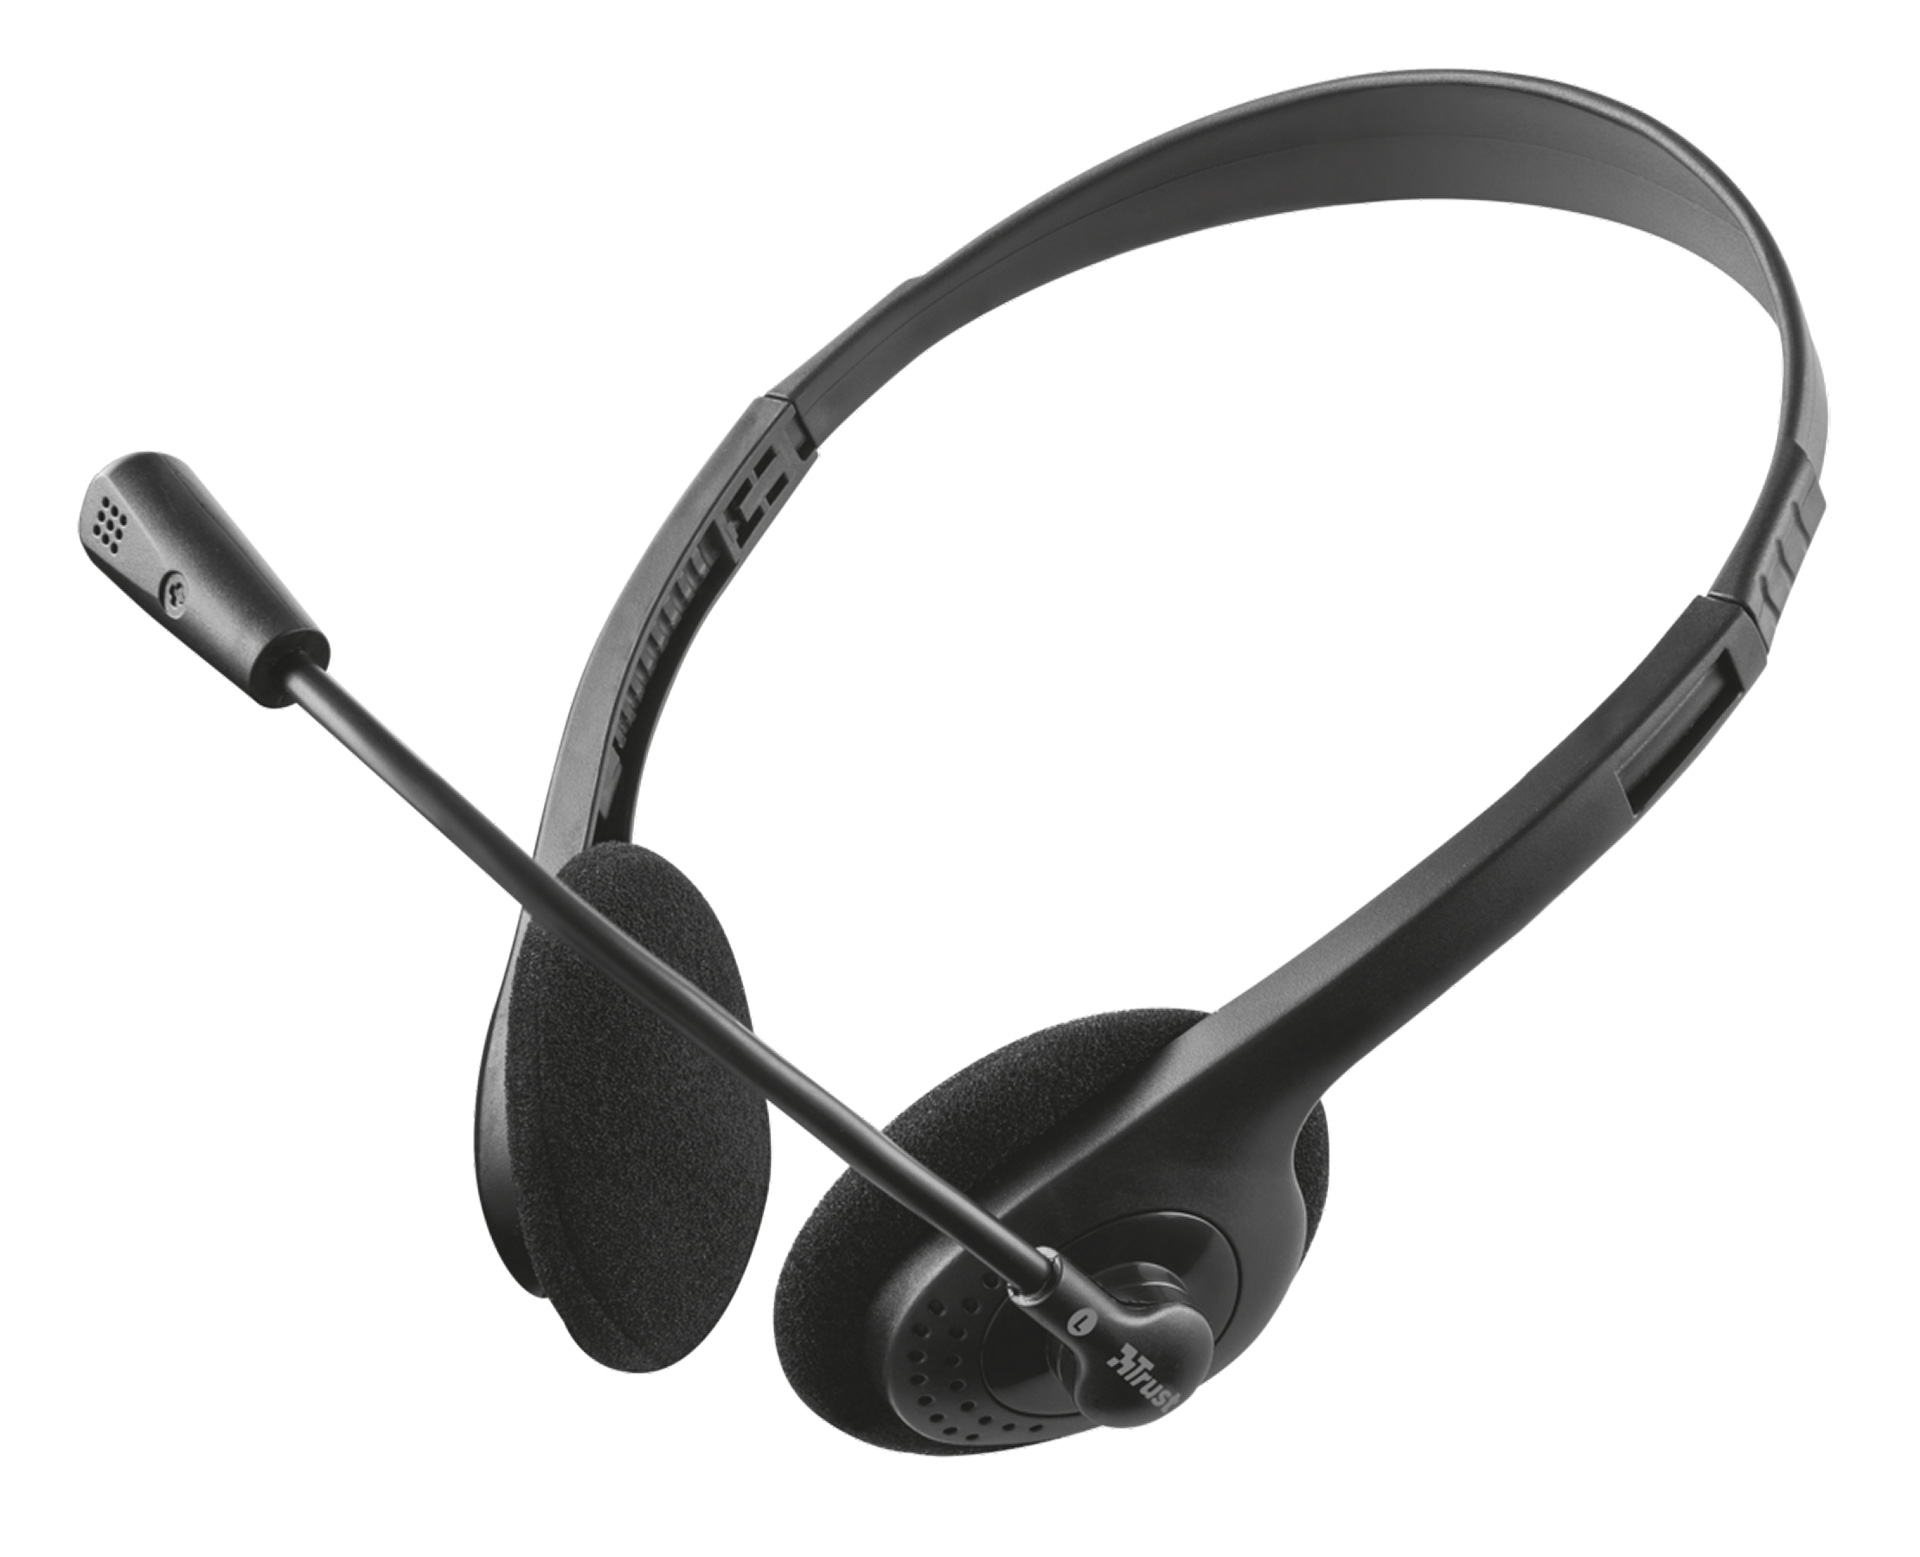 Trust Primo Chat slušalice,žičane, 2x3.5 mm, 1,8m, on ear, 2.0